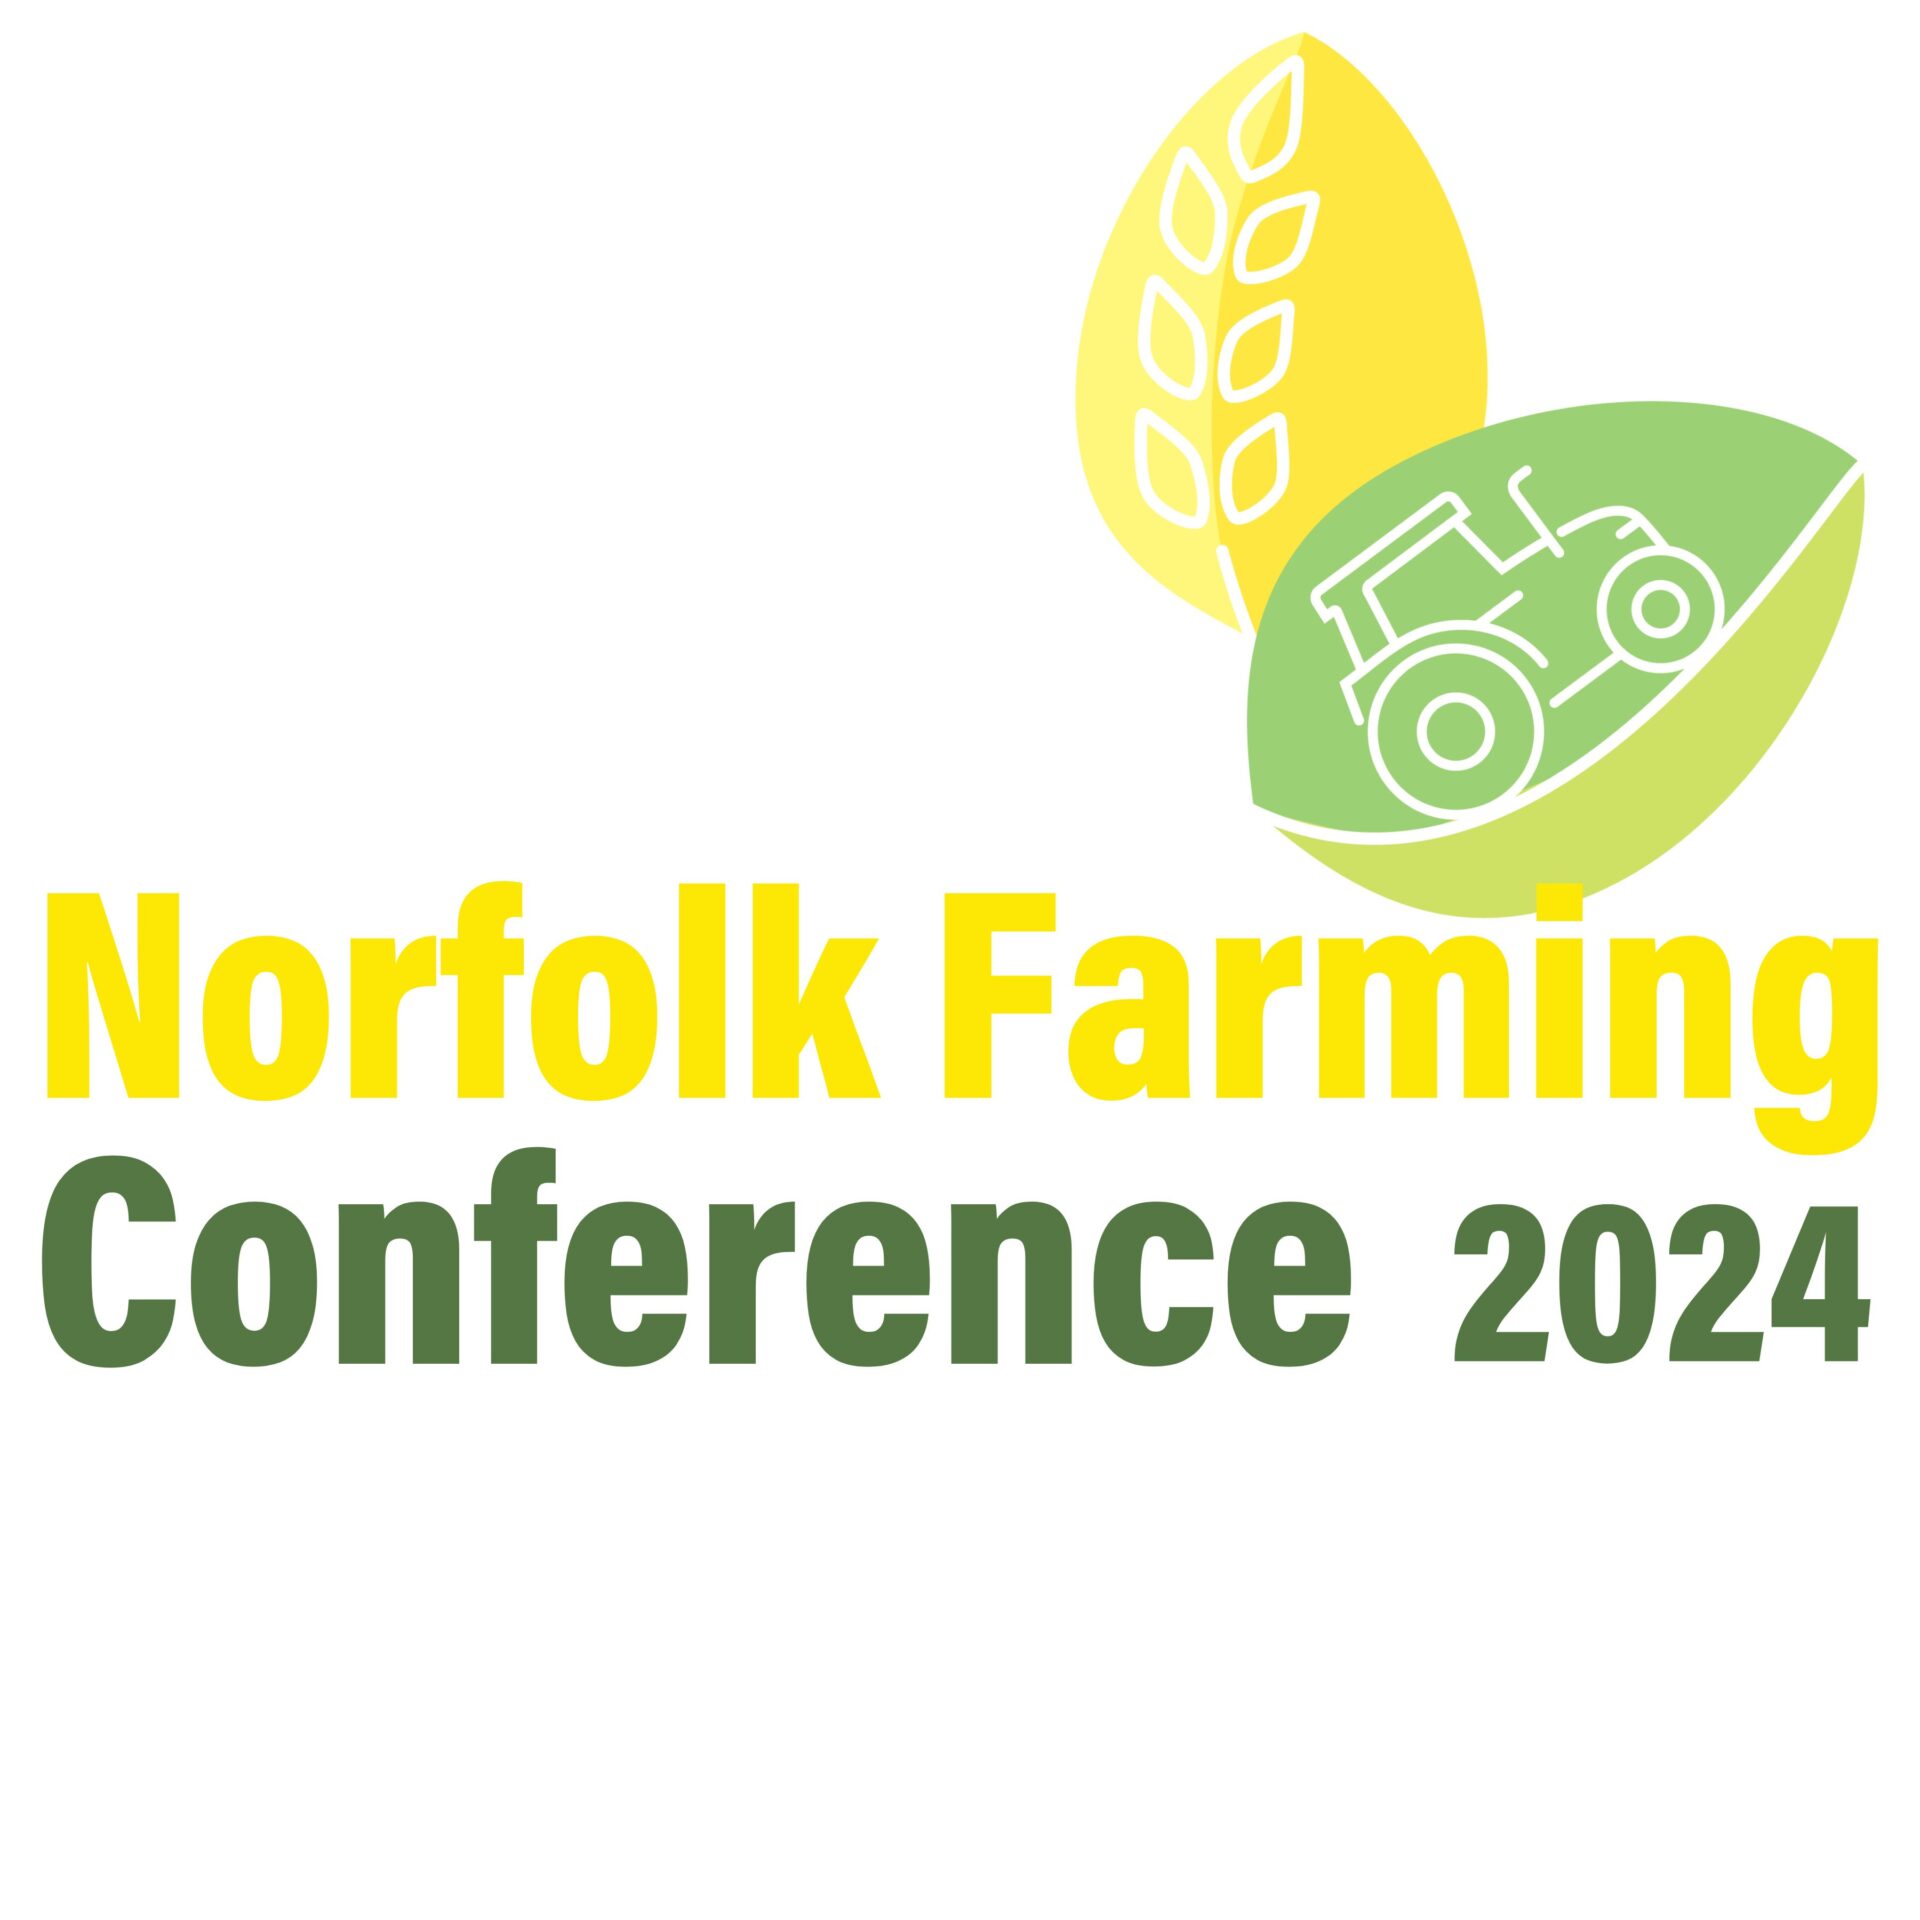 NORFOLK FARMING CONFERENCE 2024